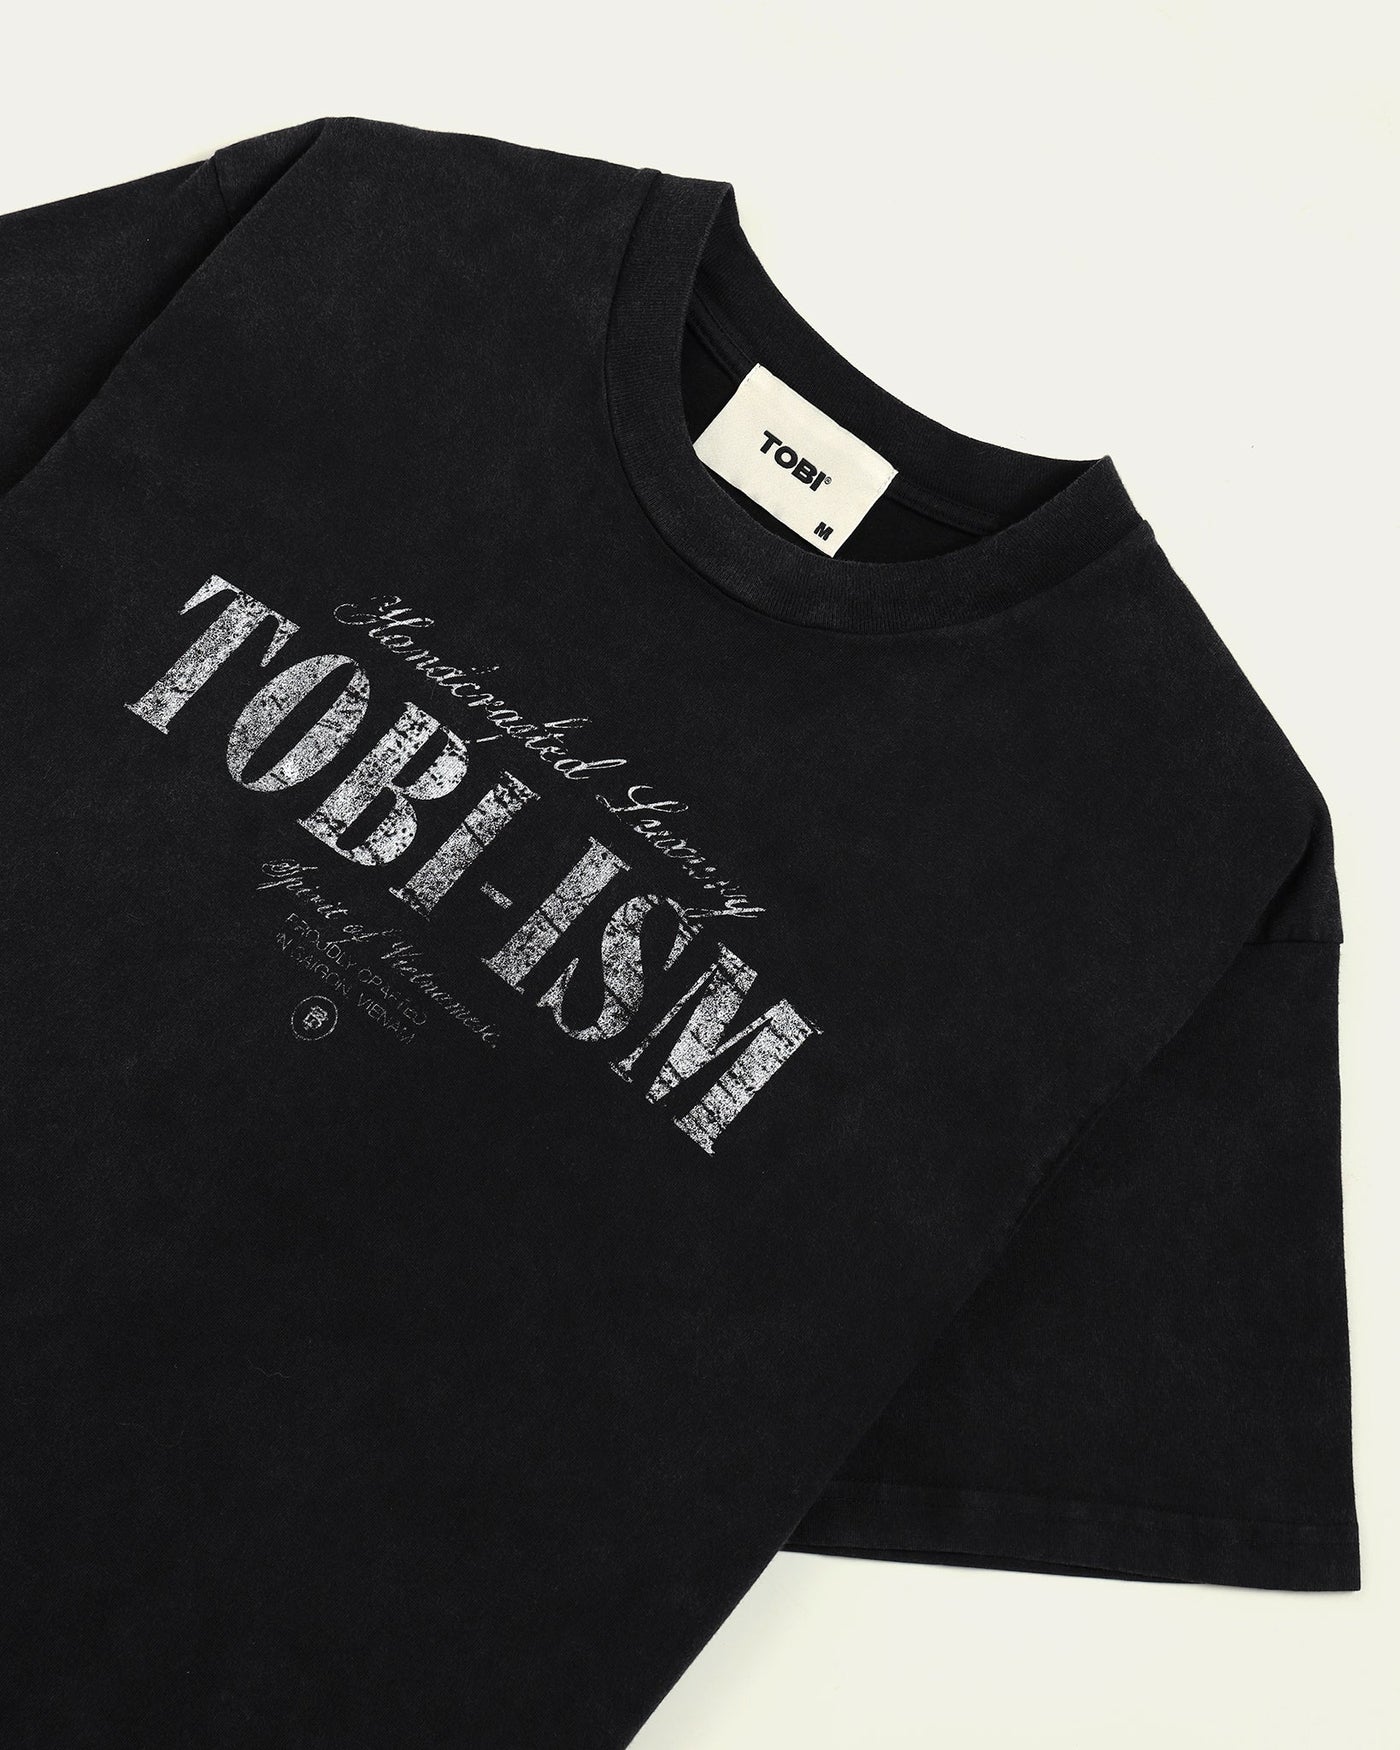 TOBIism Wash Boxy T-shirt - Vintage Black - TOBI